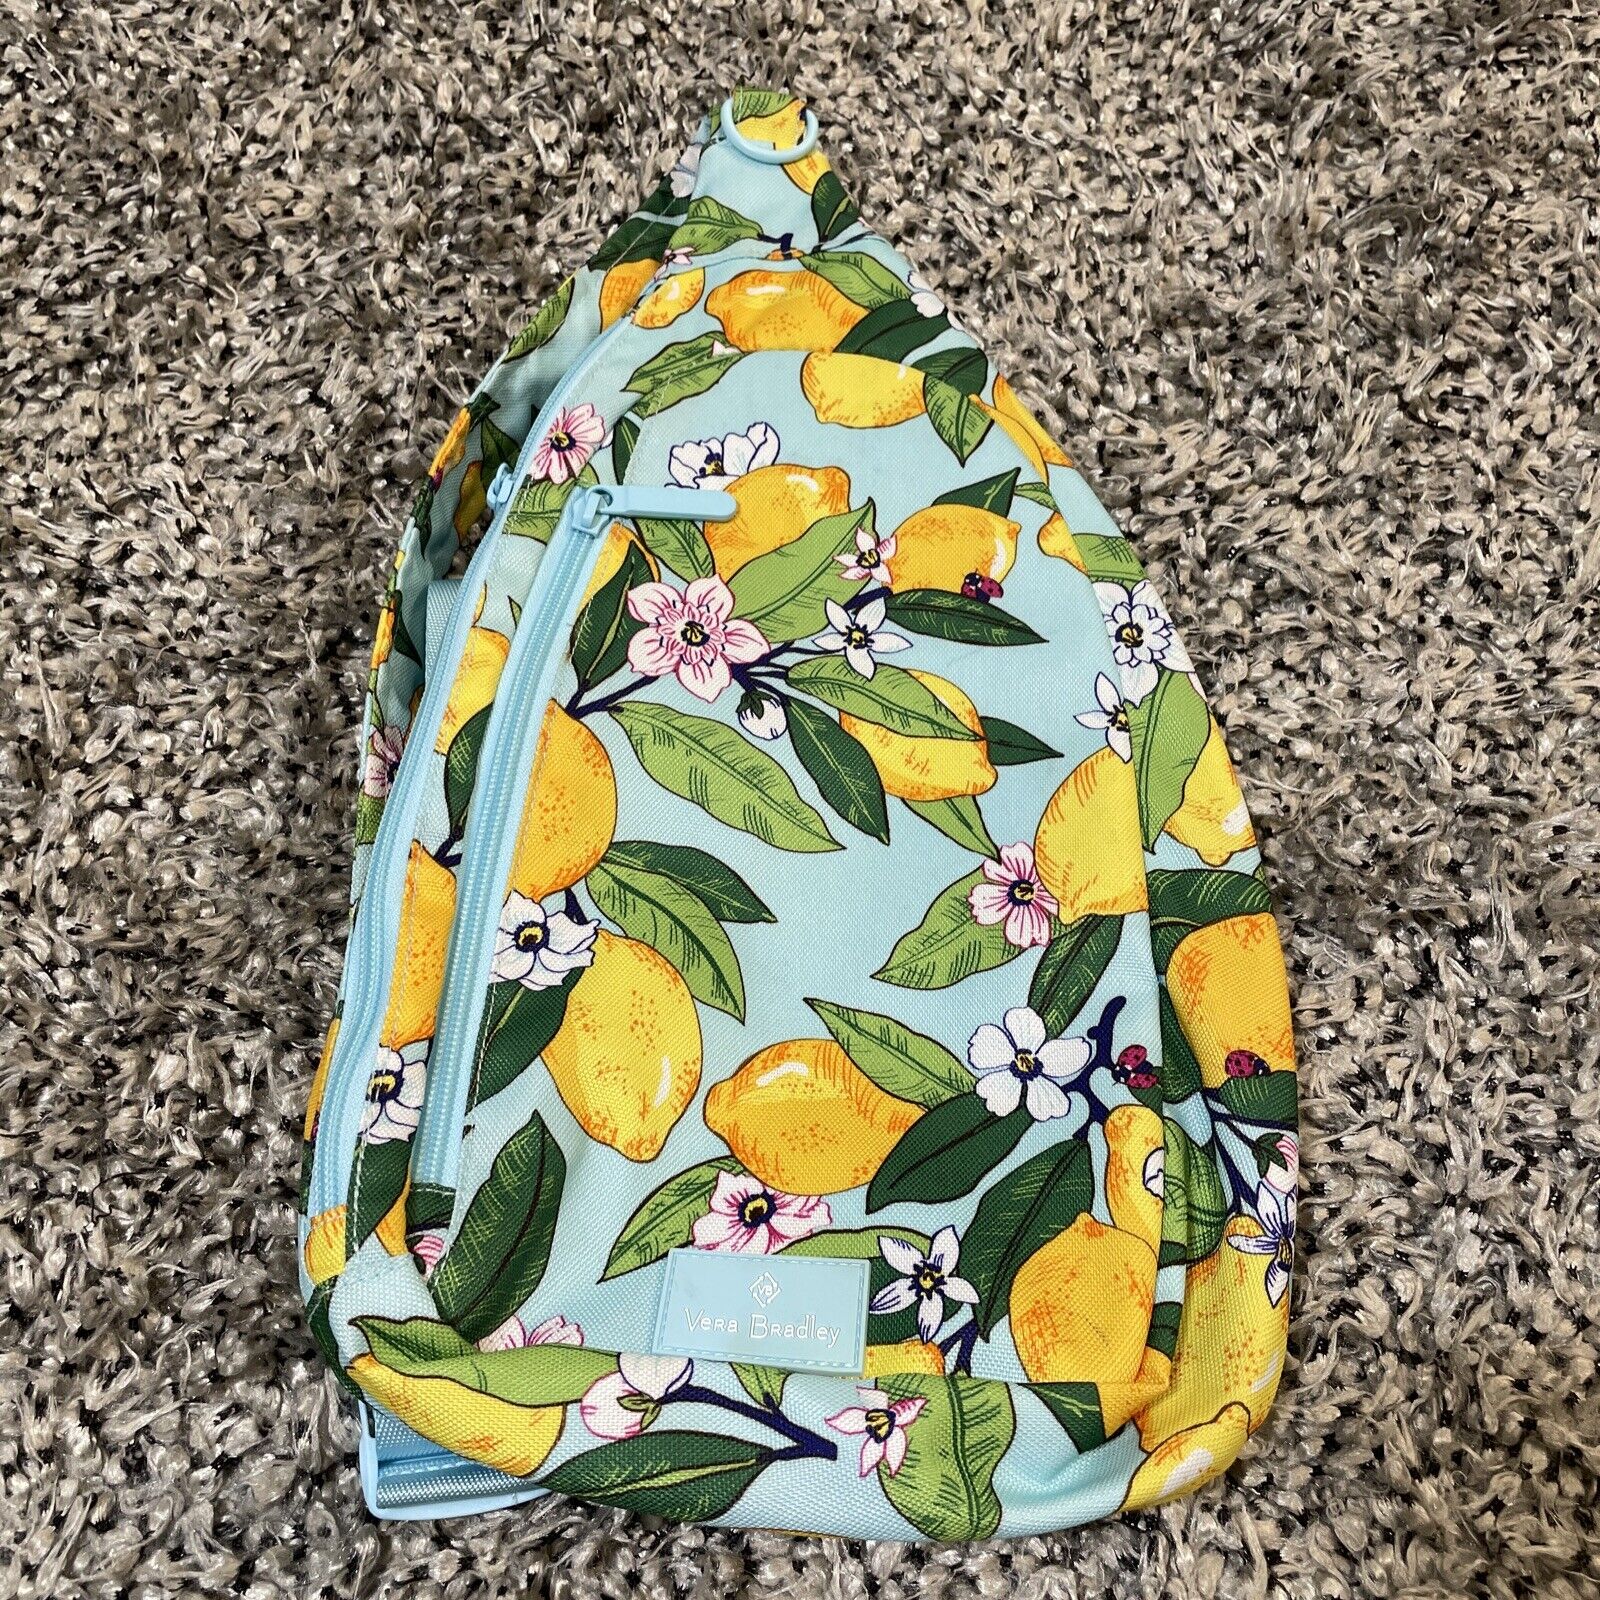 Vera Bradley Lighten Up Essential Compact Sling Backpack in "Lemon Grove"